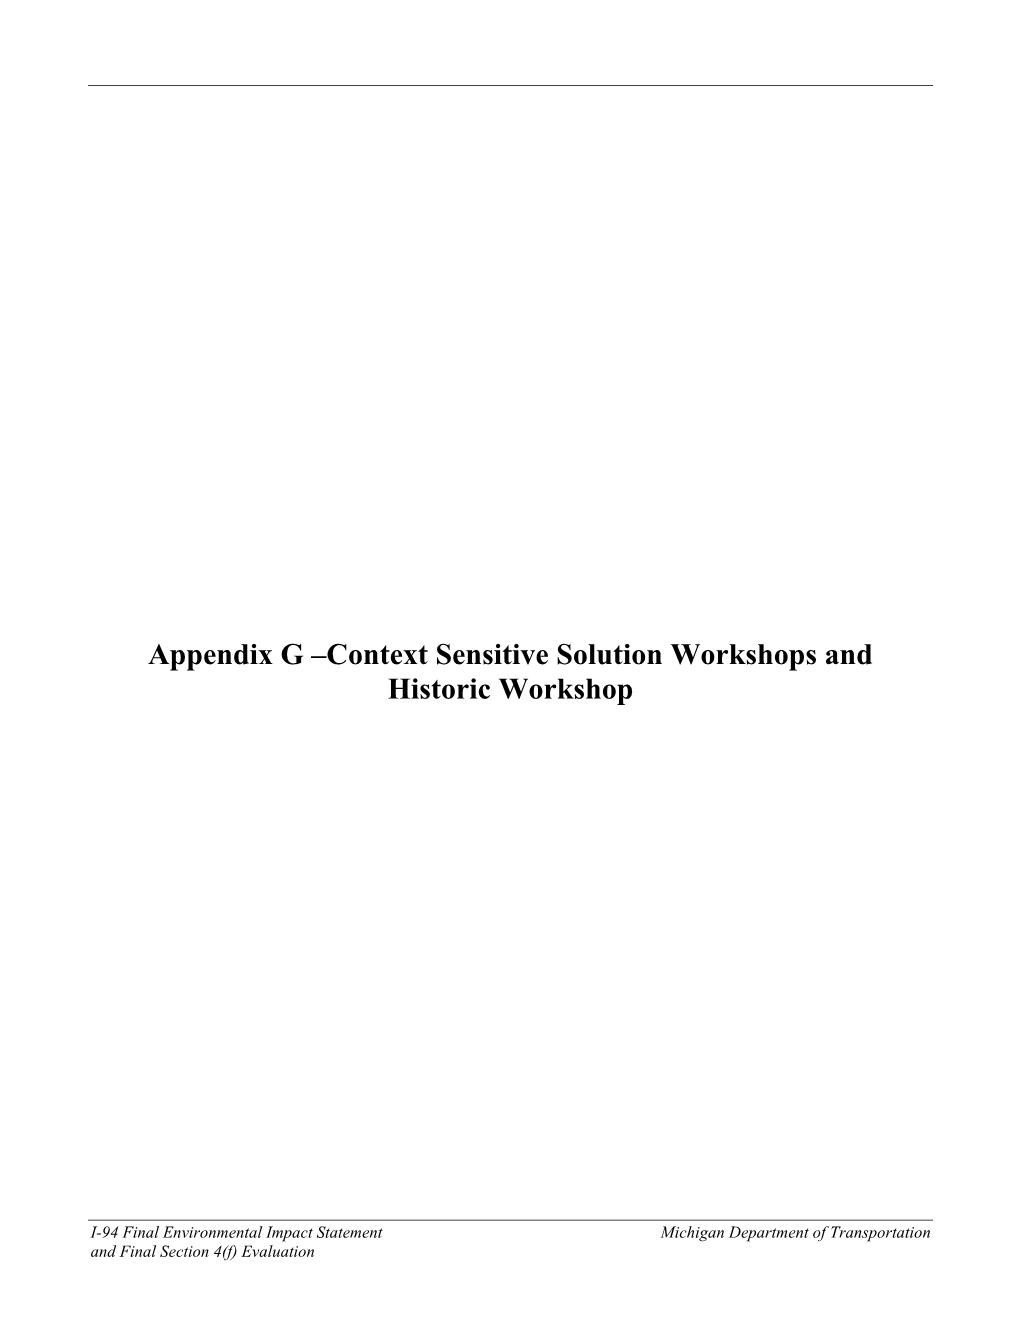 Appendix G –Context Sensitive Solution Workshops and Historic Workshop